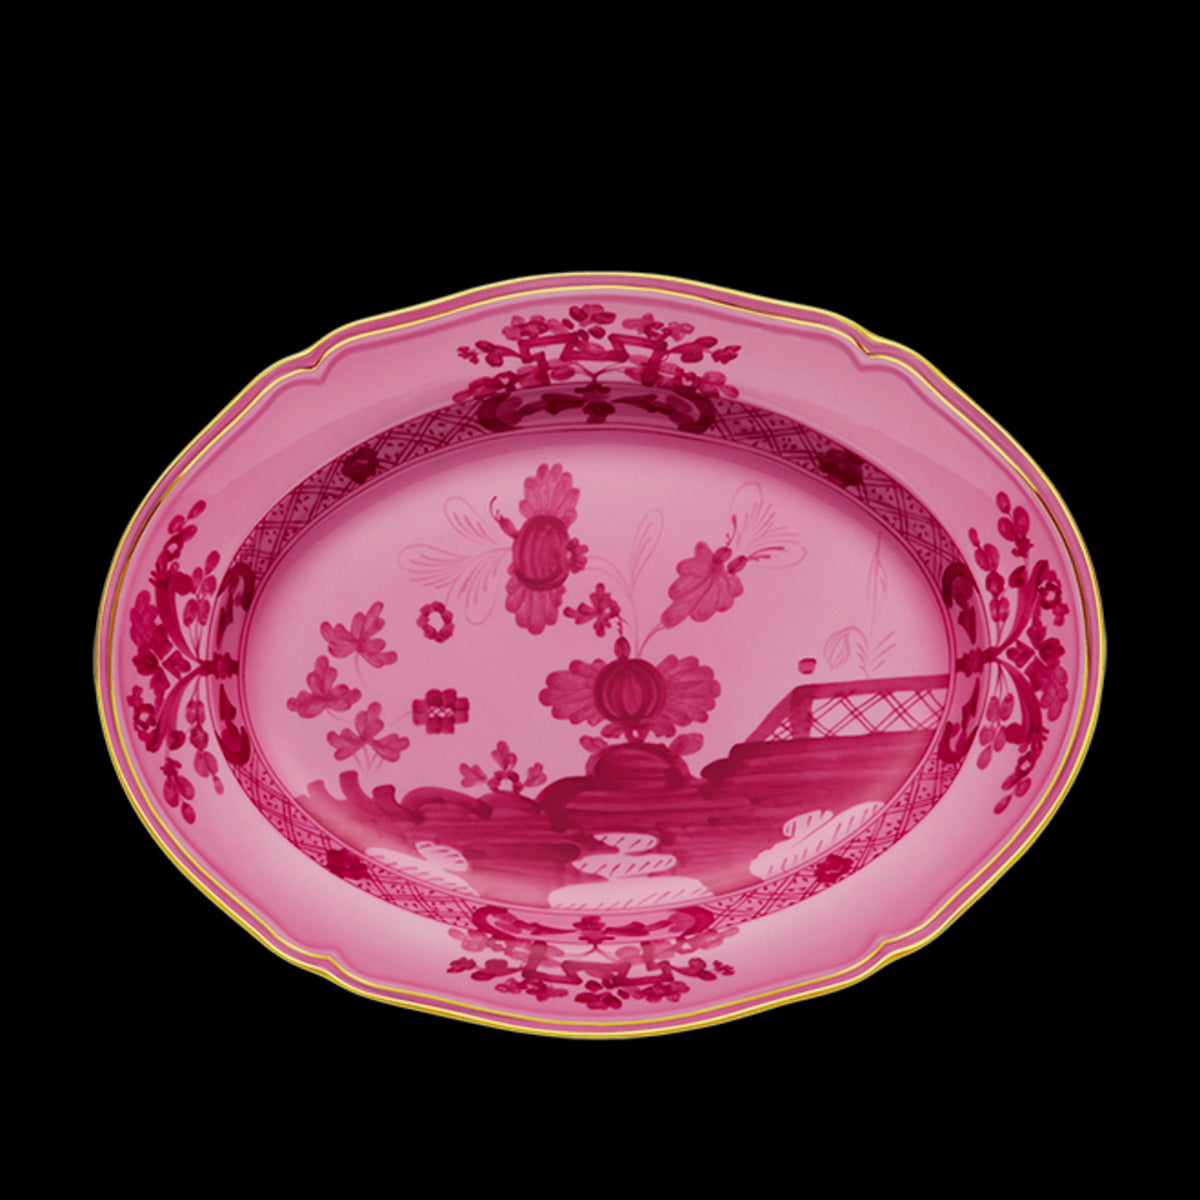 Oriente Italiano Large Oval Platter in Porpora